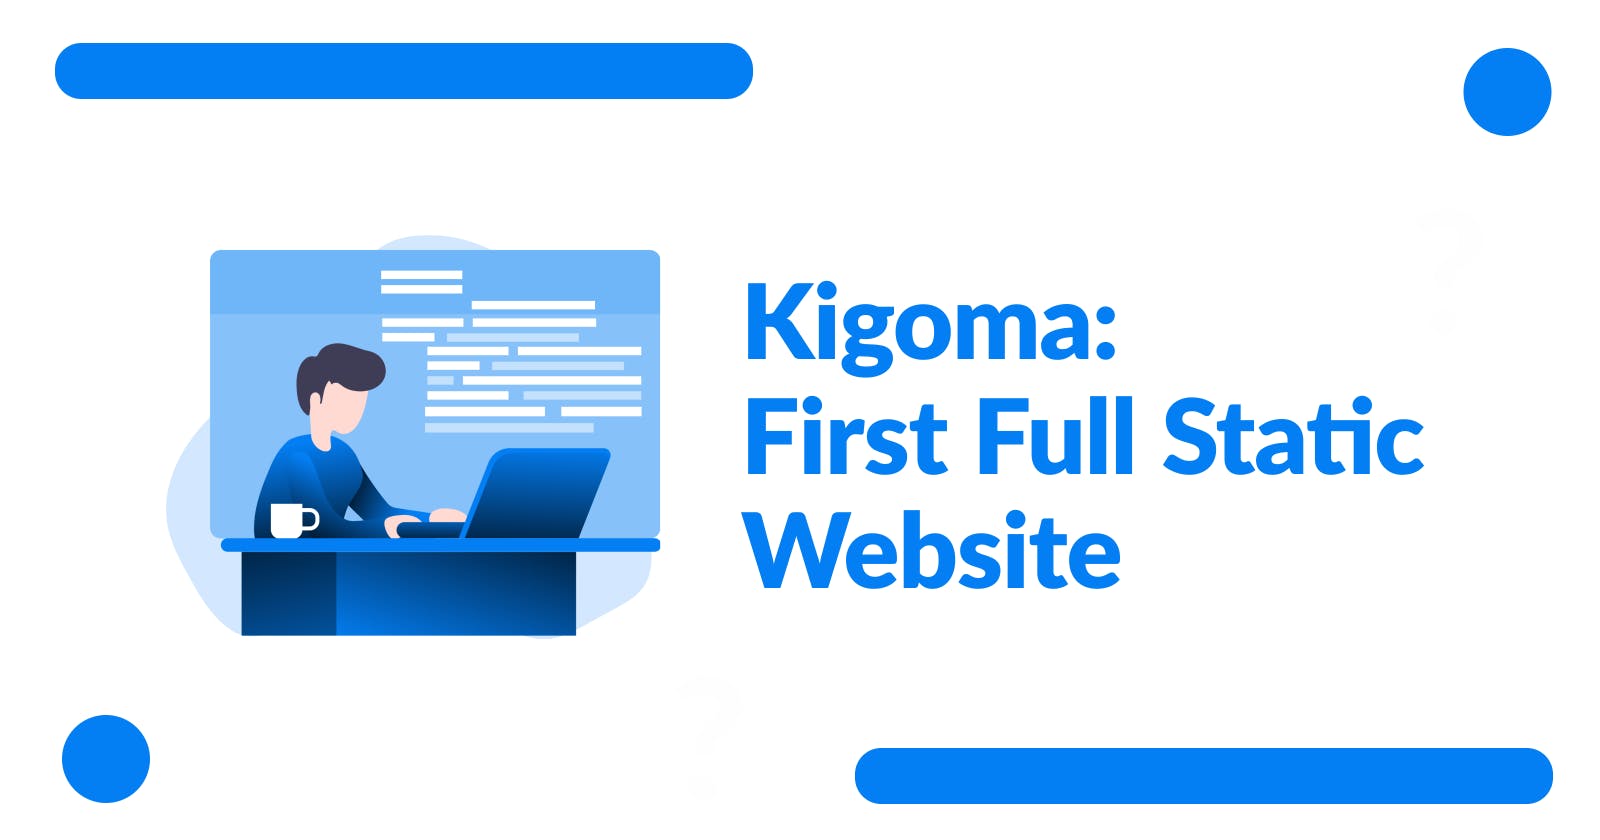 First Full Static Website – Kigoma